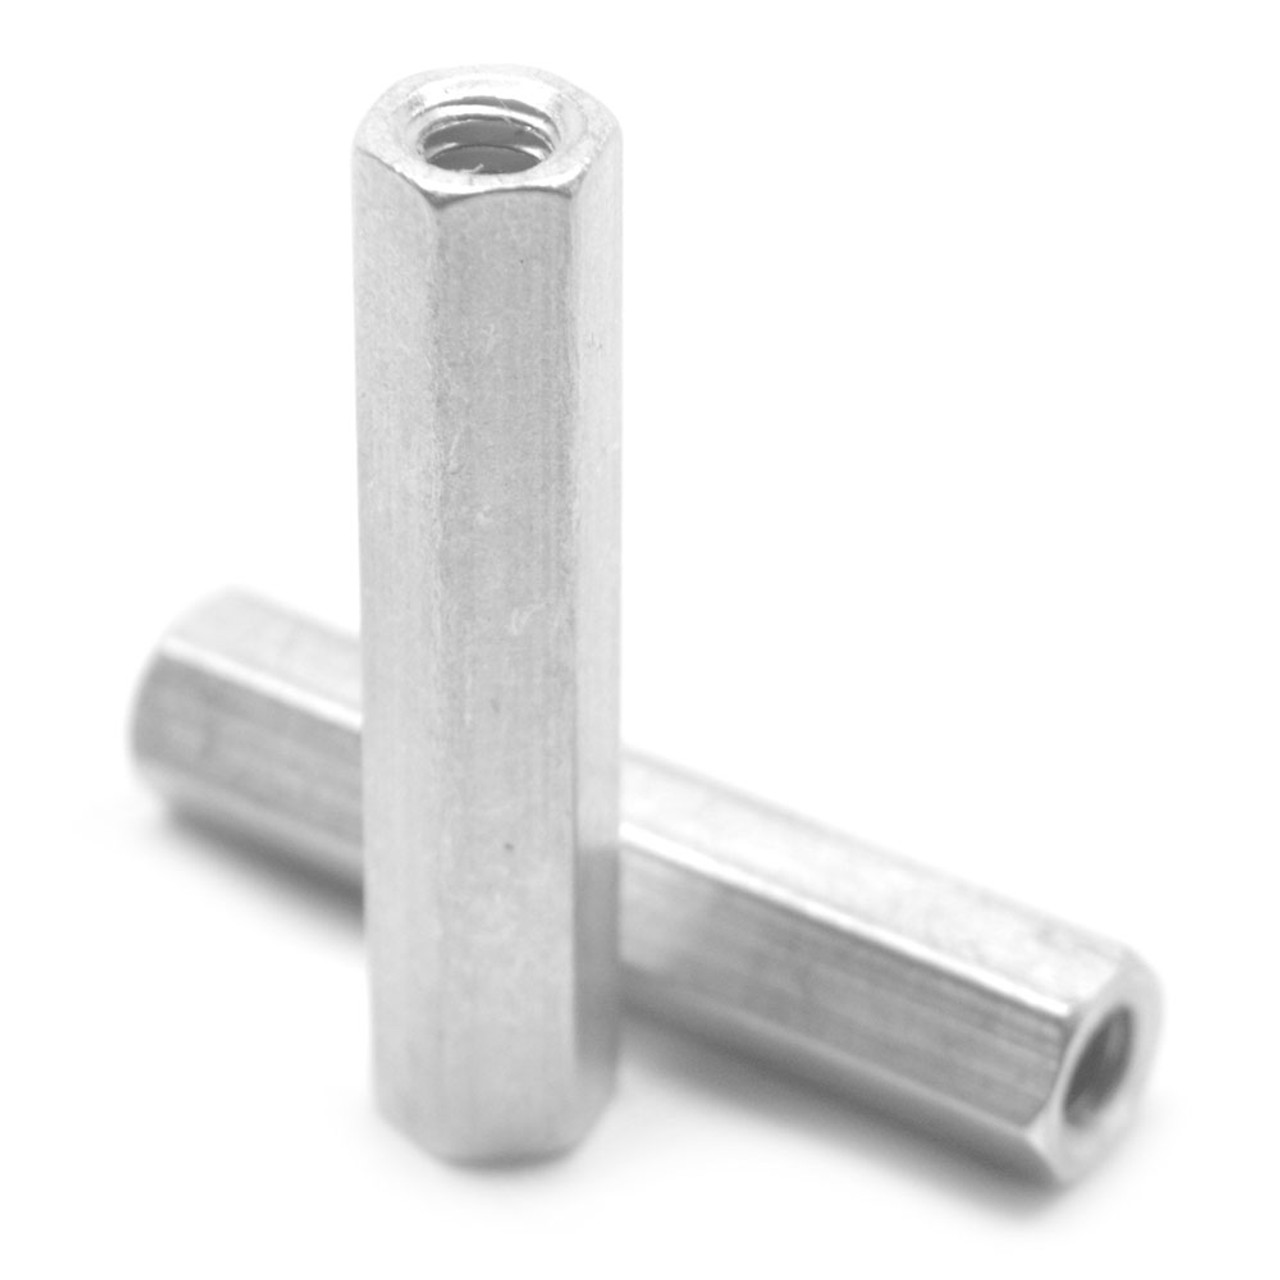 #4-40 x 1 1/4" x 1/4" AF Coarse Thread Hex Female Standoff Aluminum